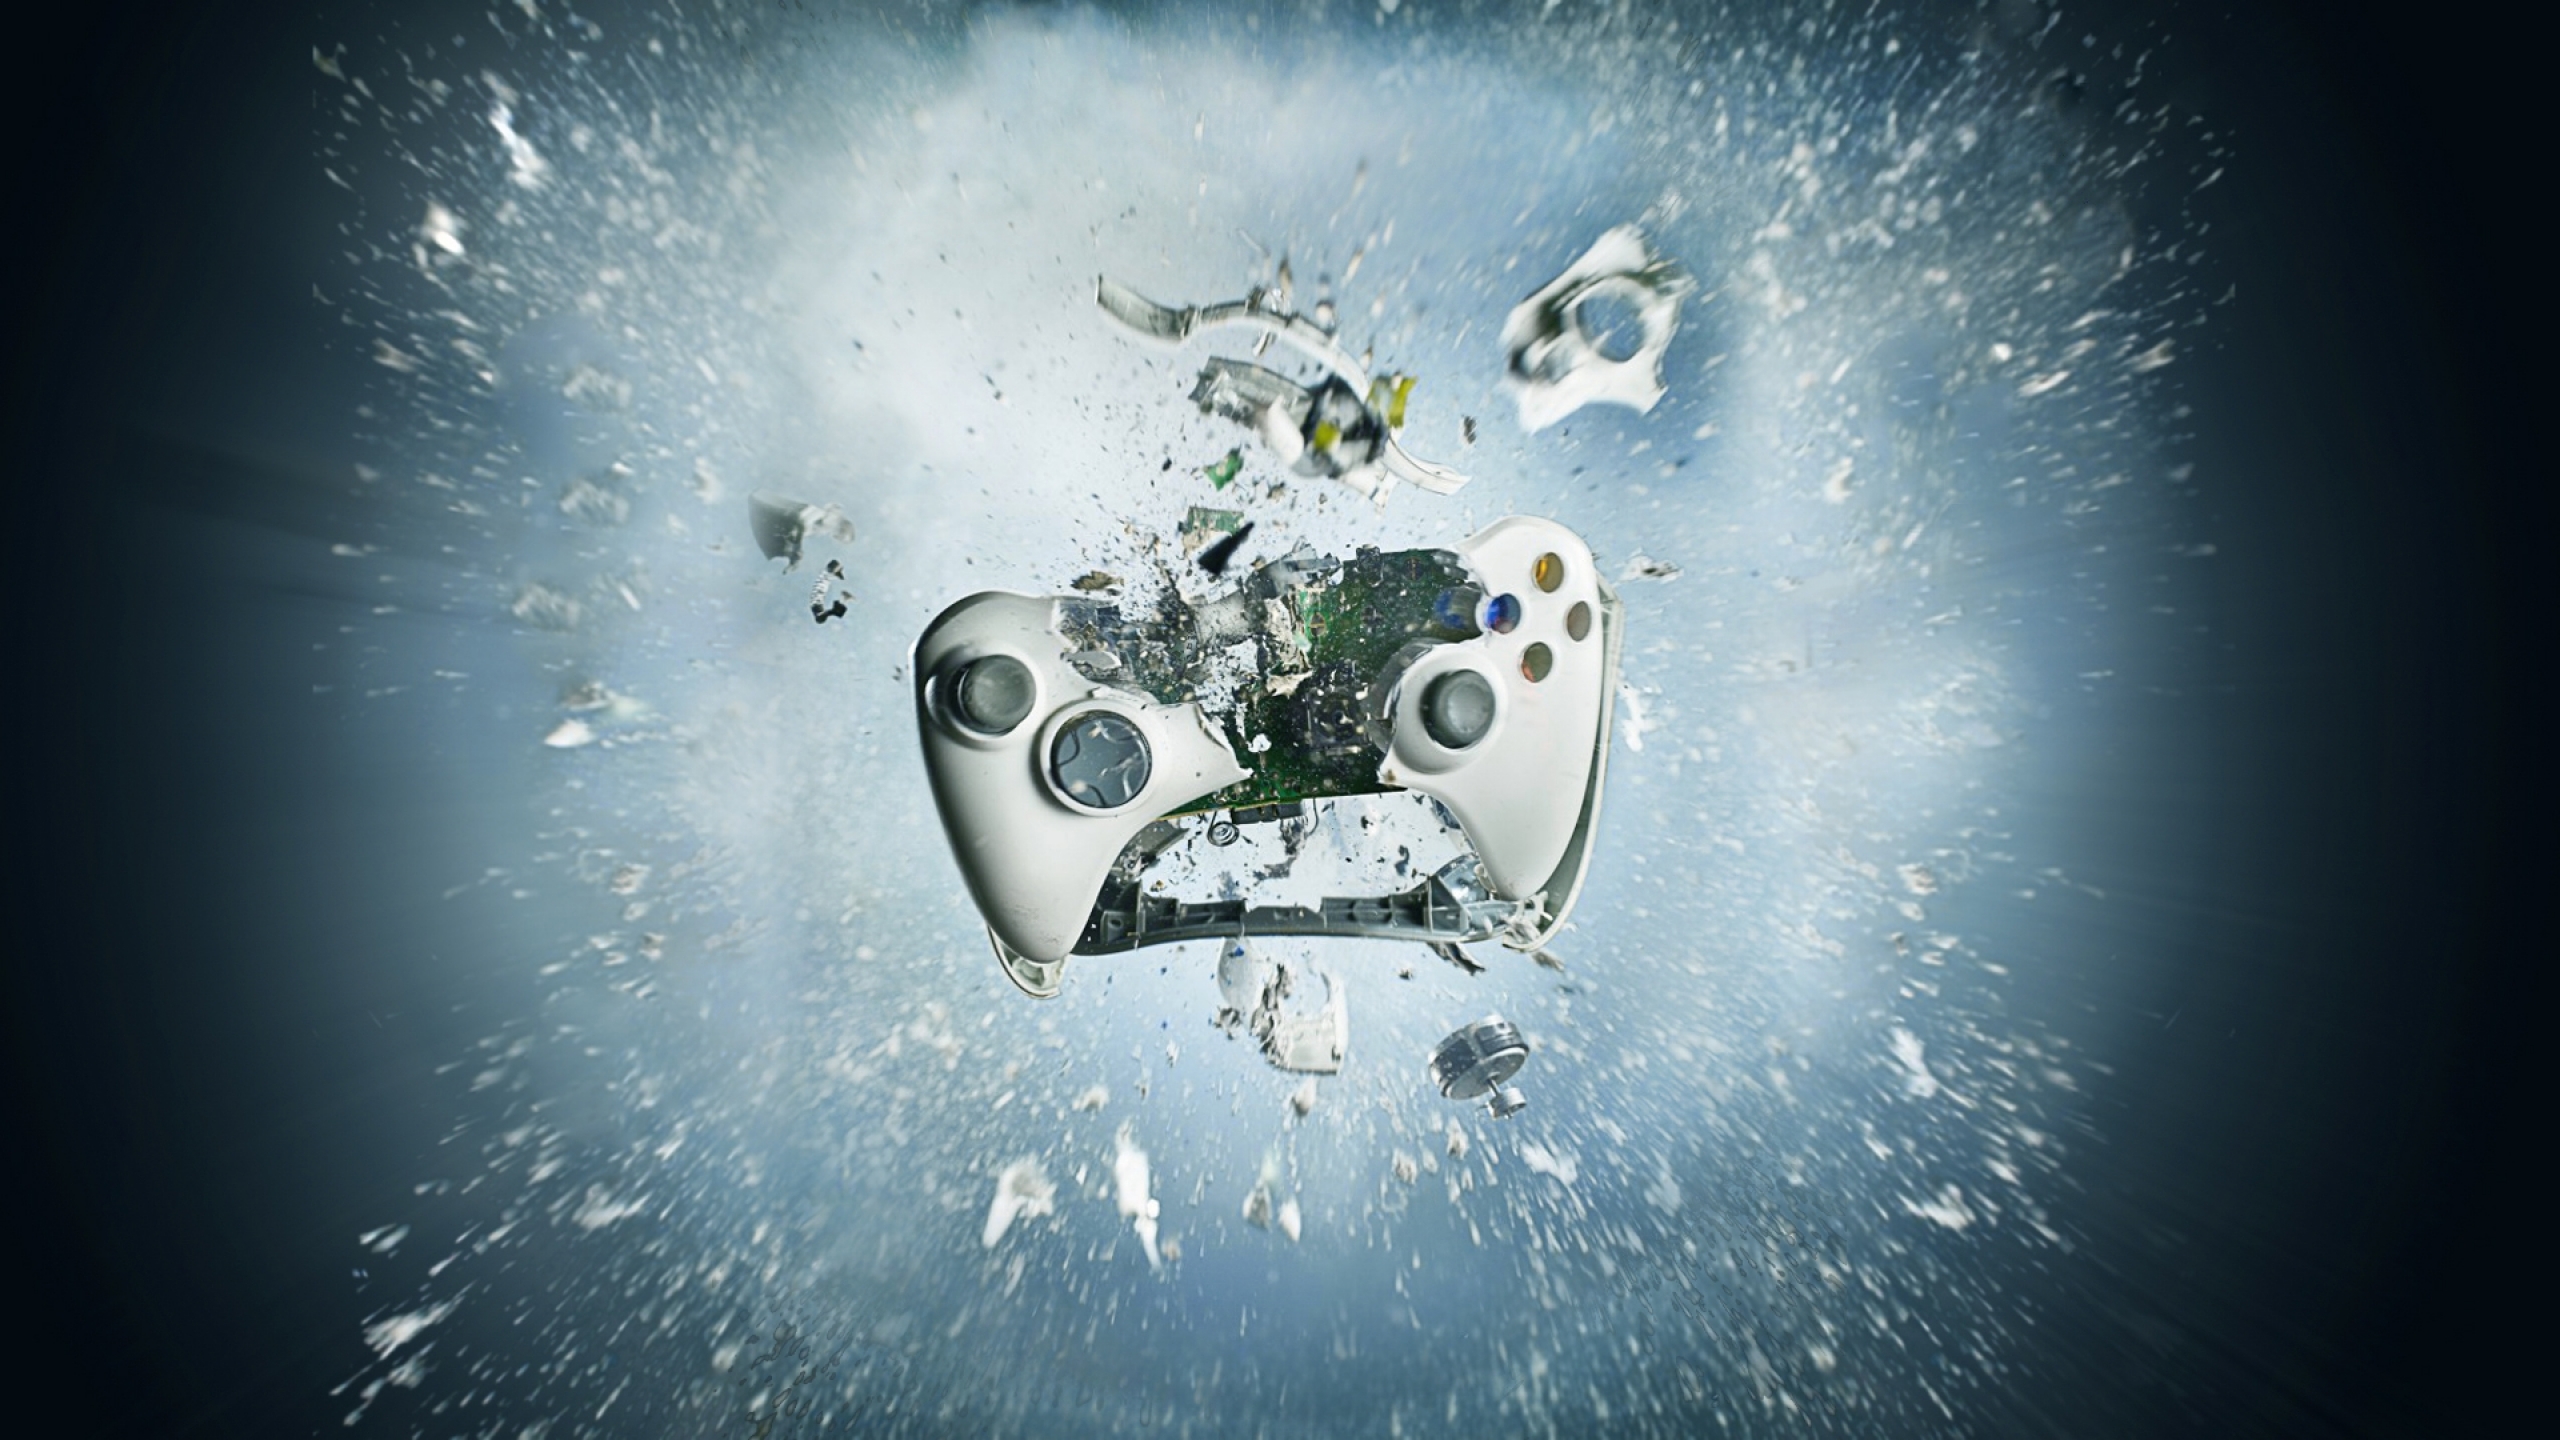 Cool Exploding Xbox Controller Wallpaper